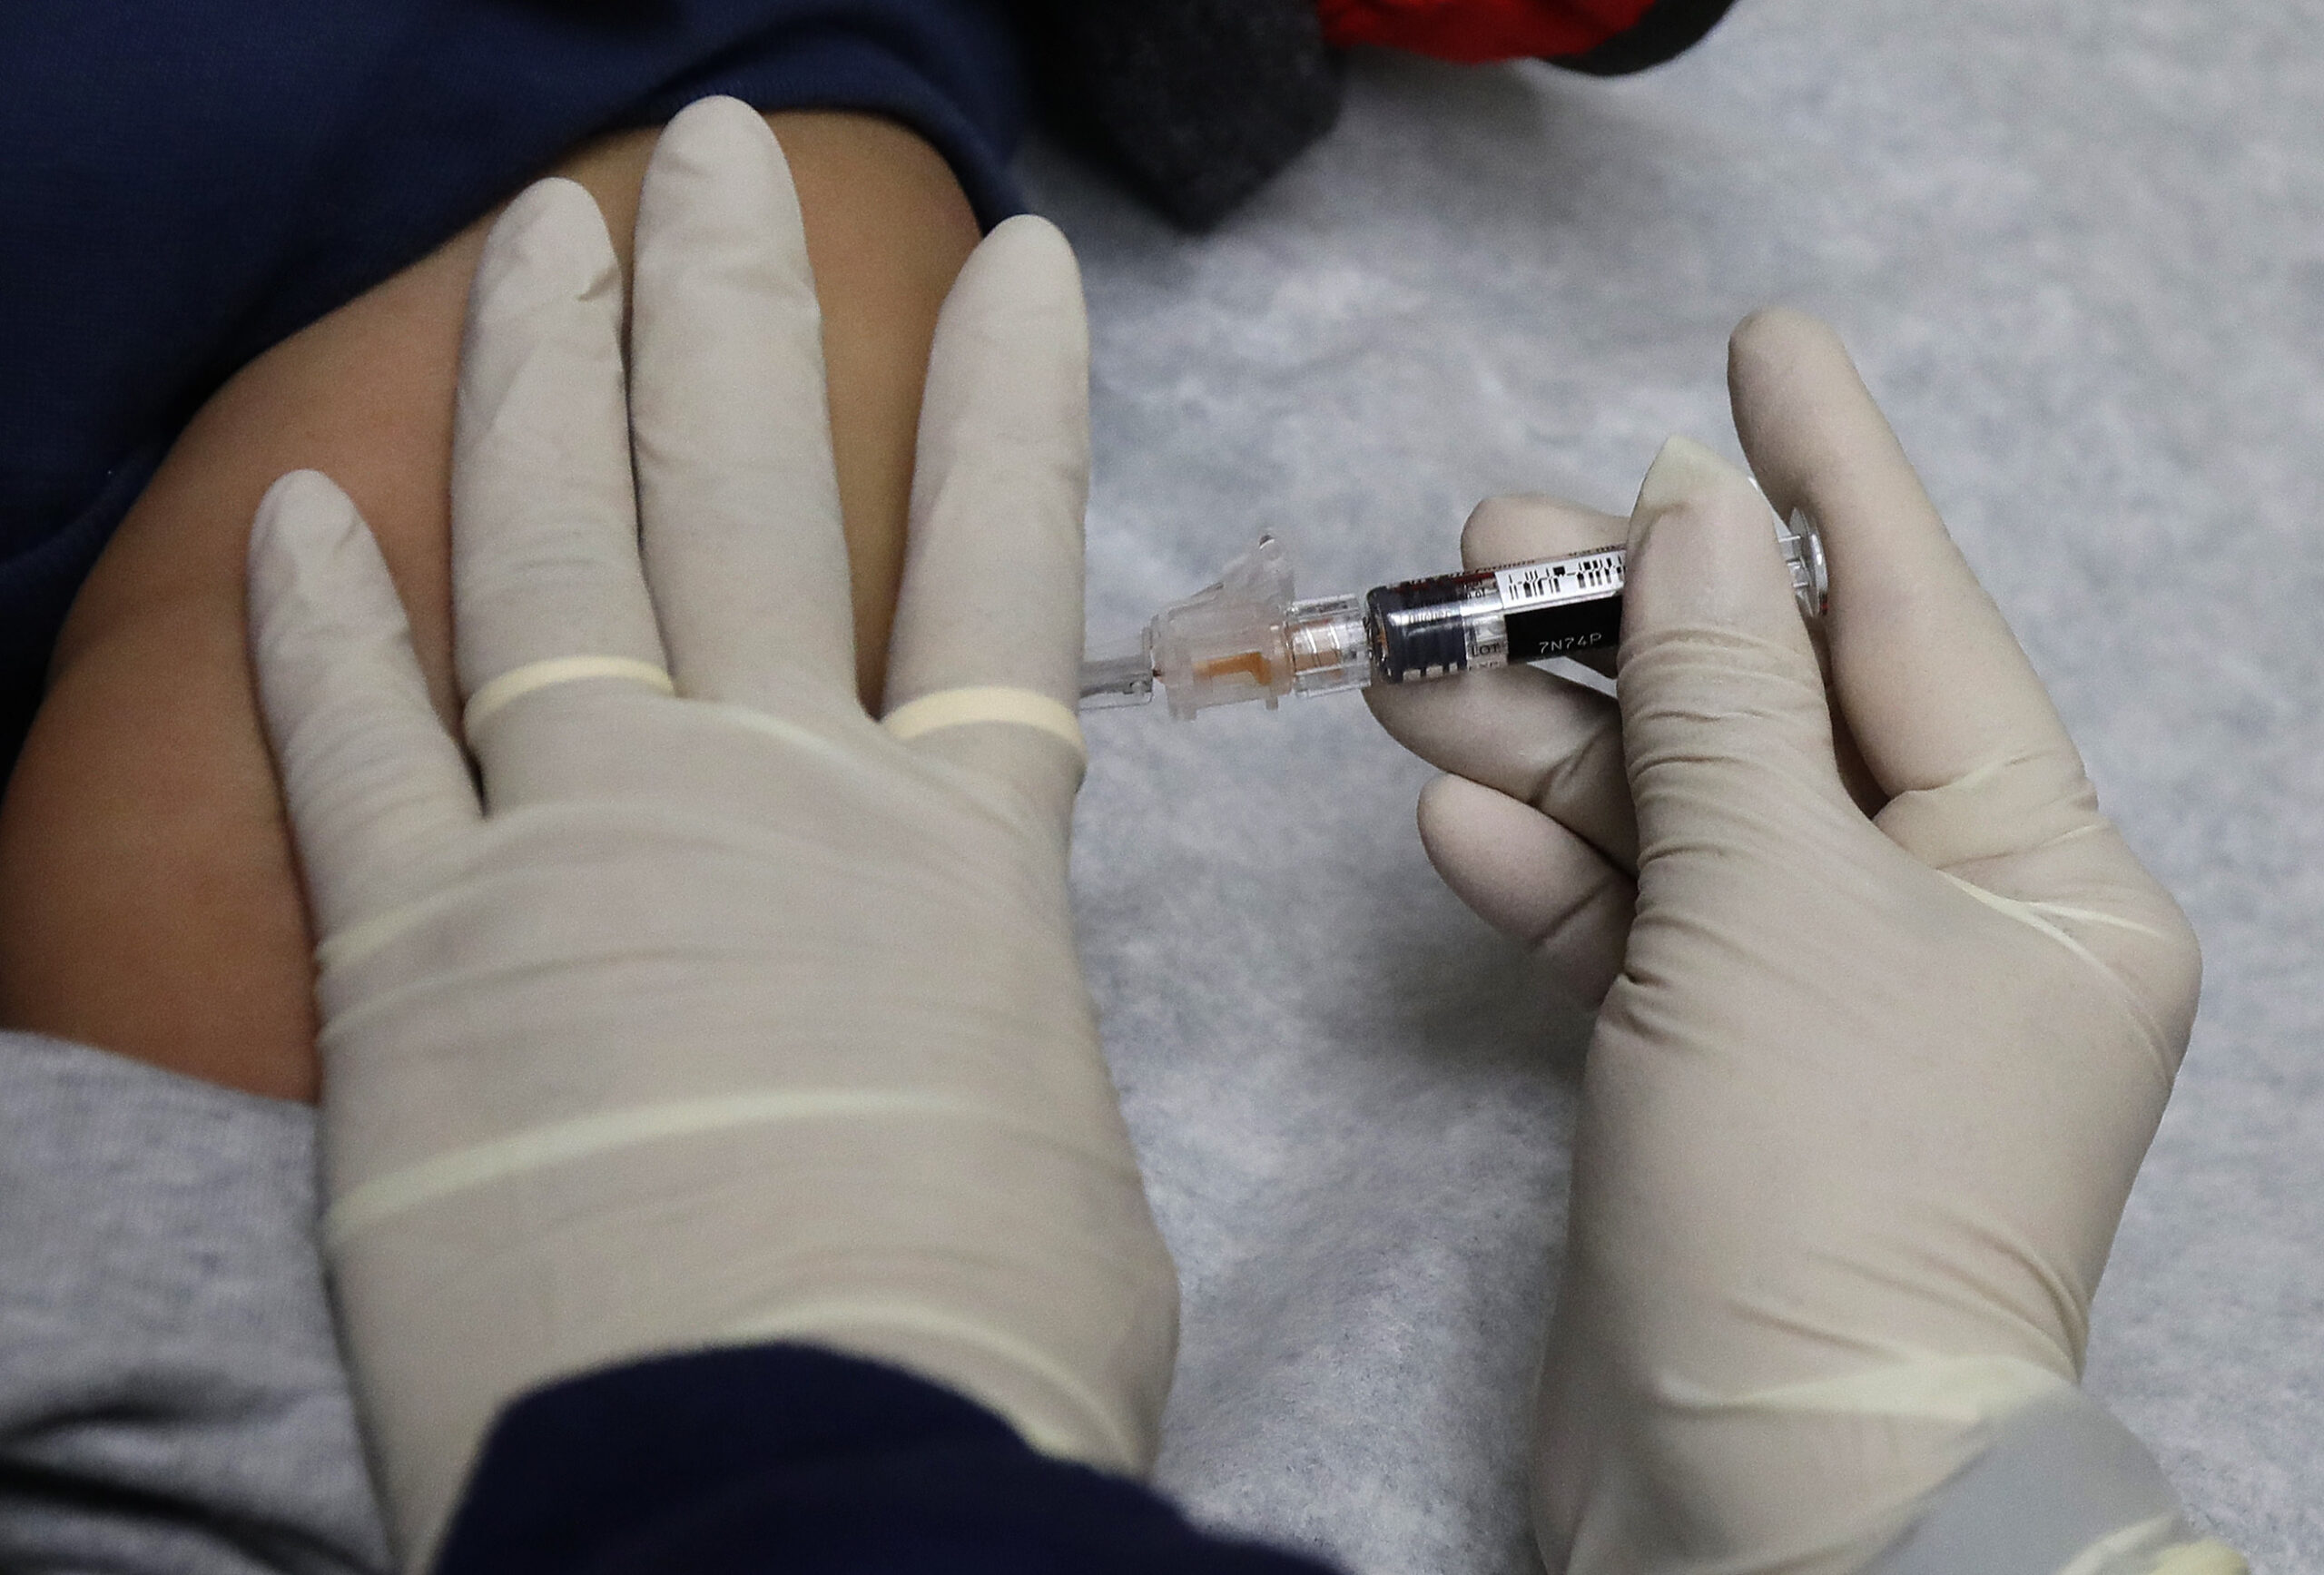 medical assistant gives a patient a flu shot